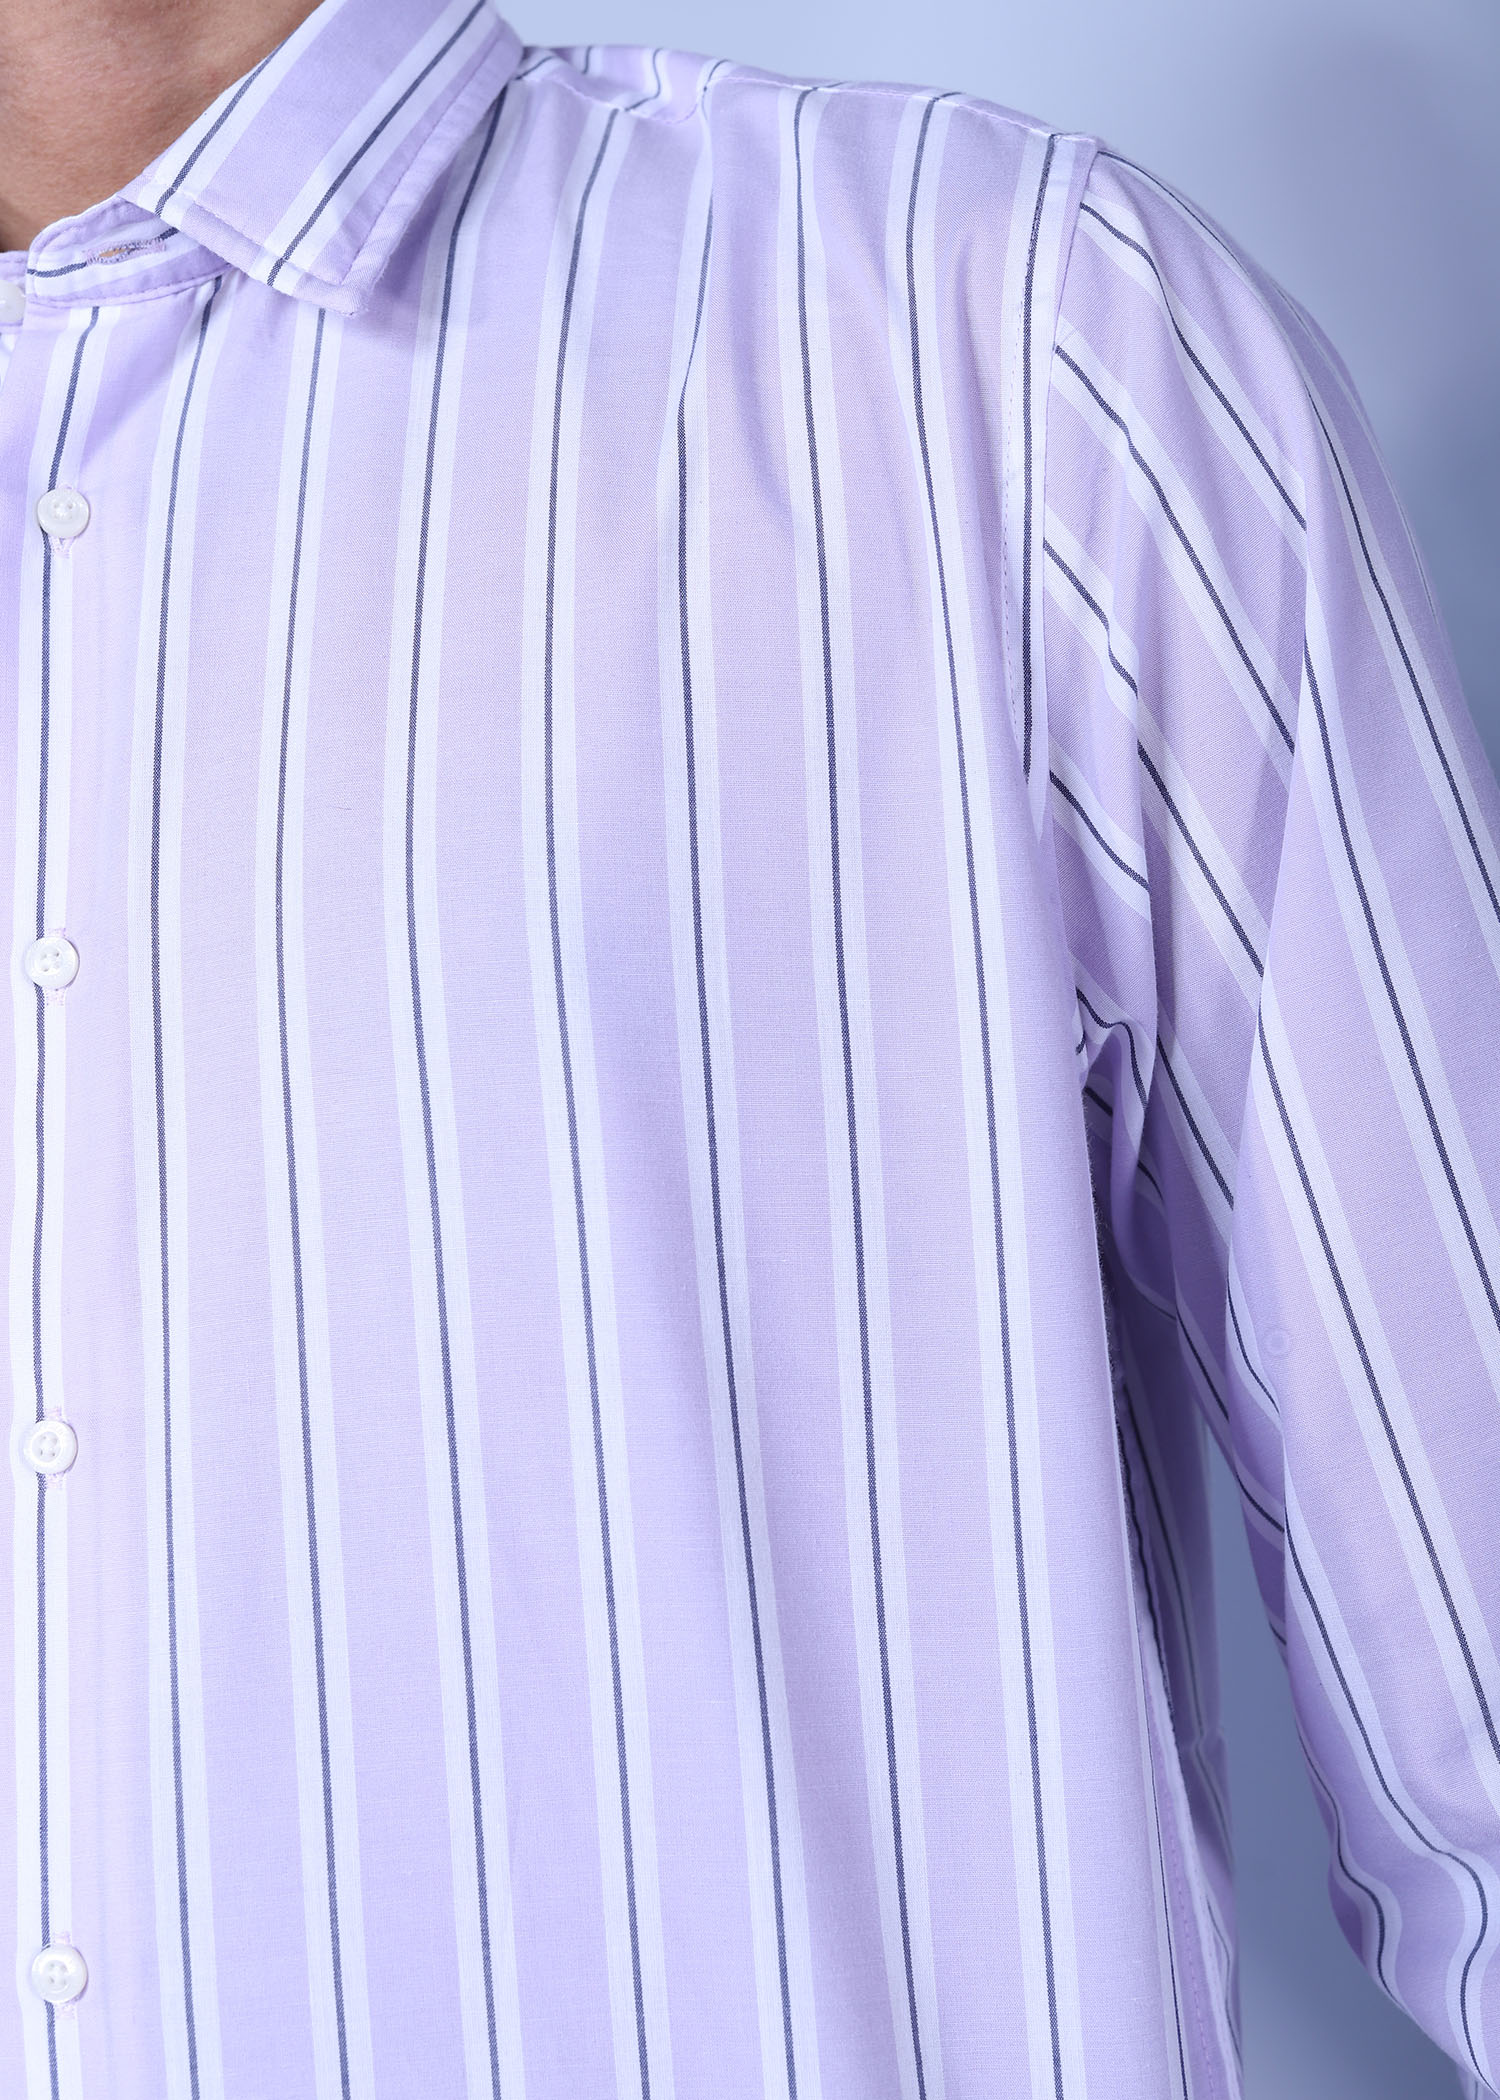 istanbul xxiii fs shirt lt purple color close front view